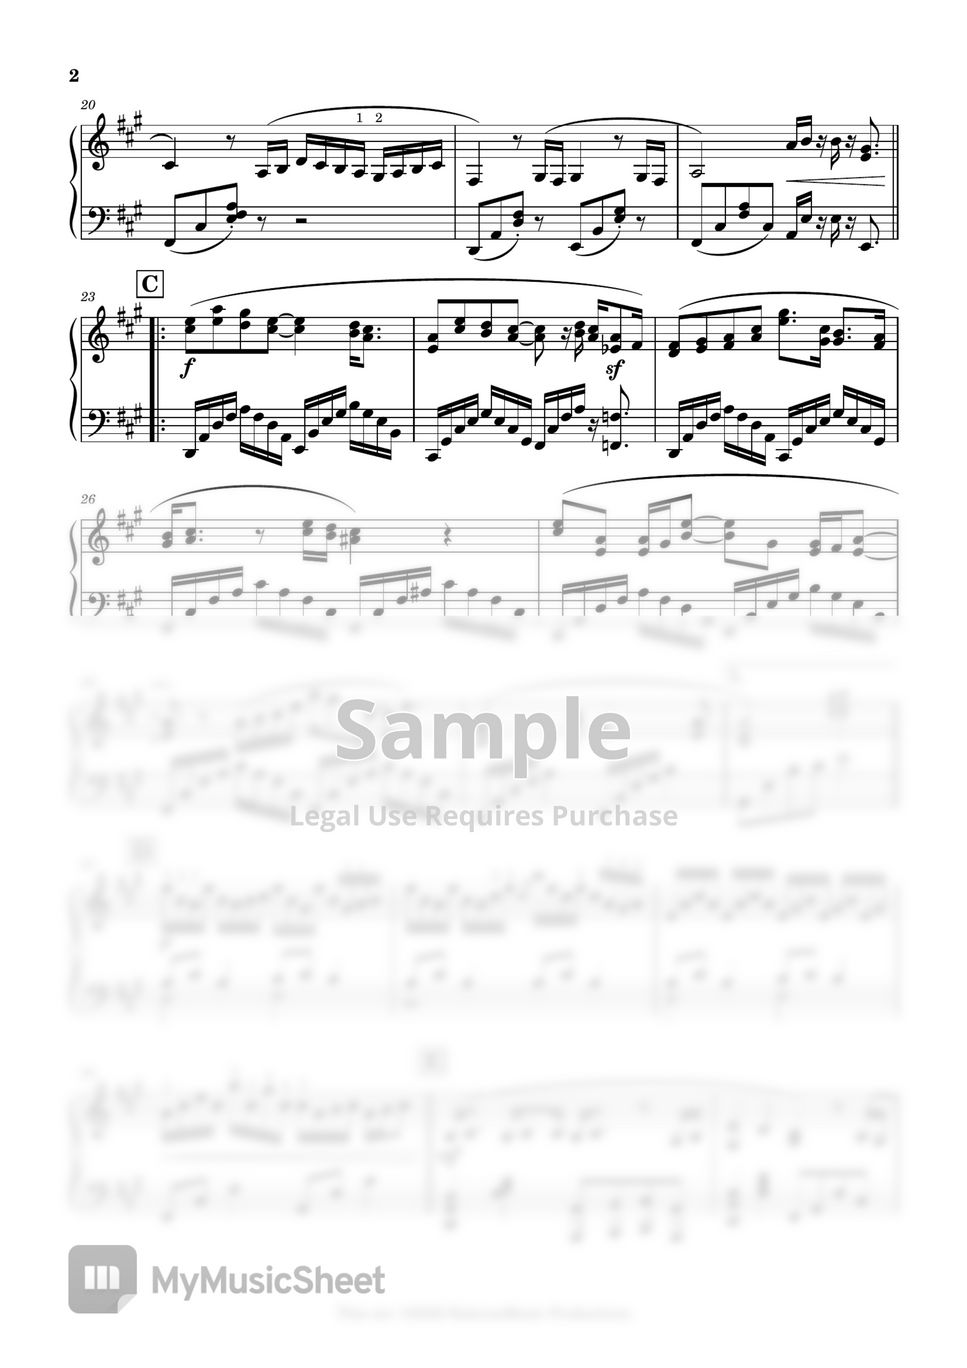 Kaika by cadode - Summertime Render Ending 1 - Piano Arrangement